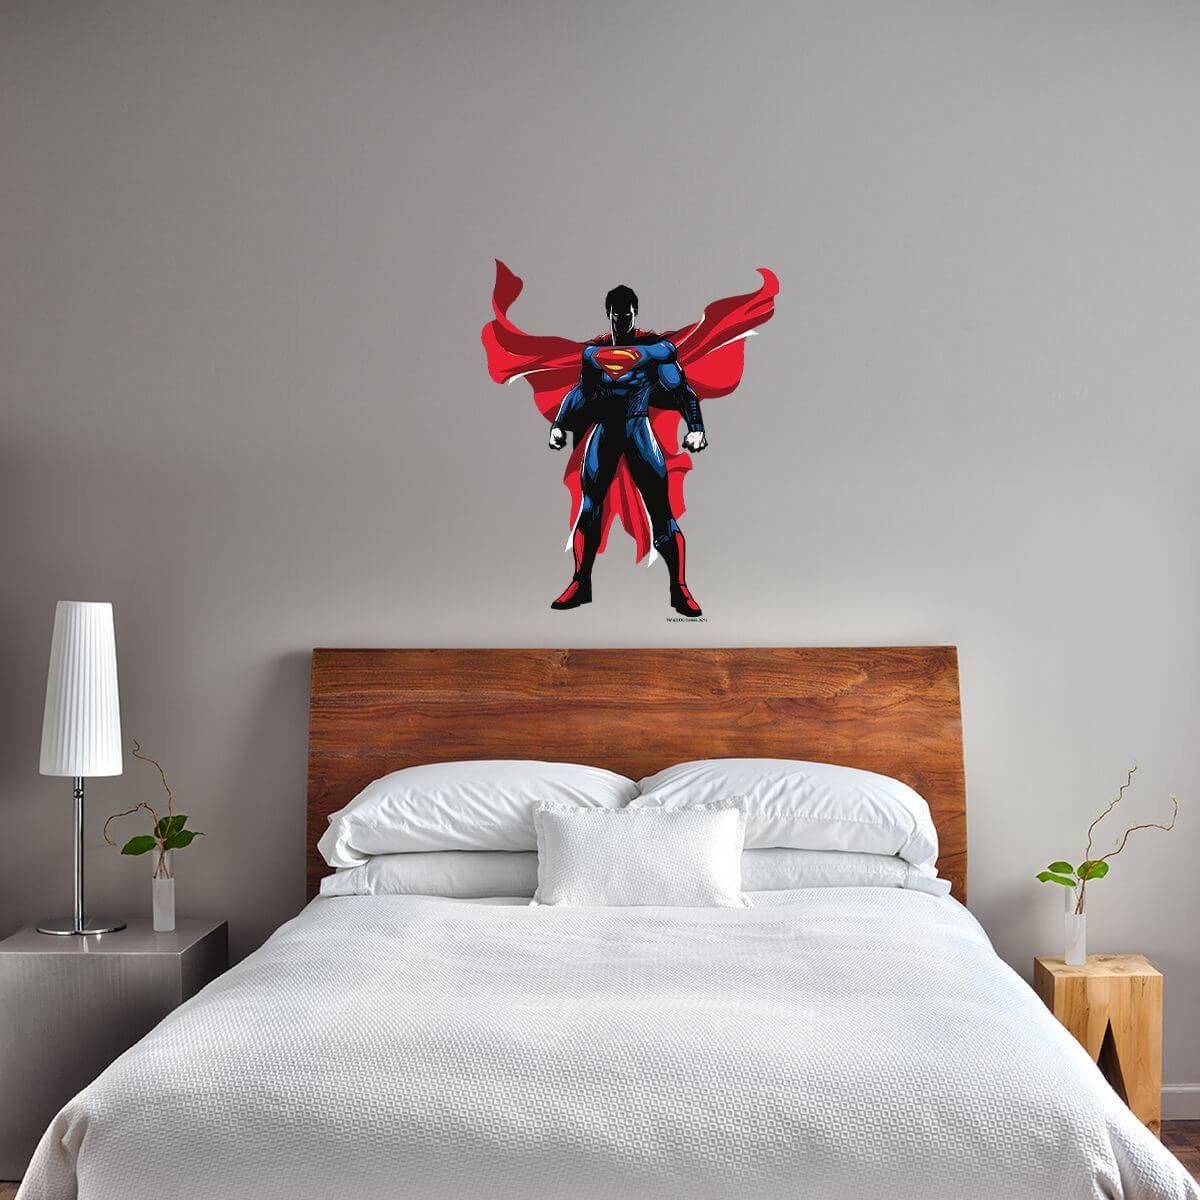 Kismet Decals Superman Battle Stance Licensed Wall Sticker - Easy DIY Justice League Home & Room Decor Wall Art - Kismet Decals